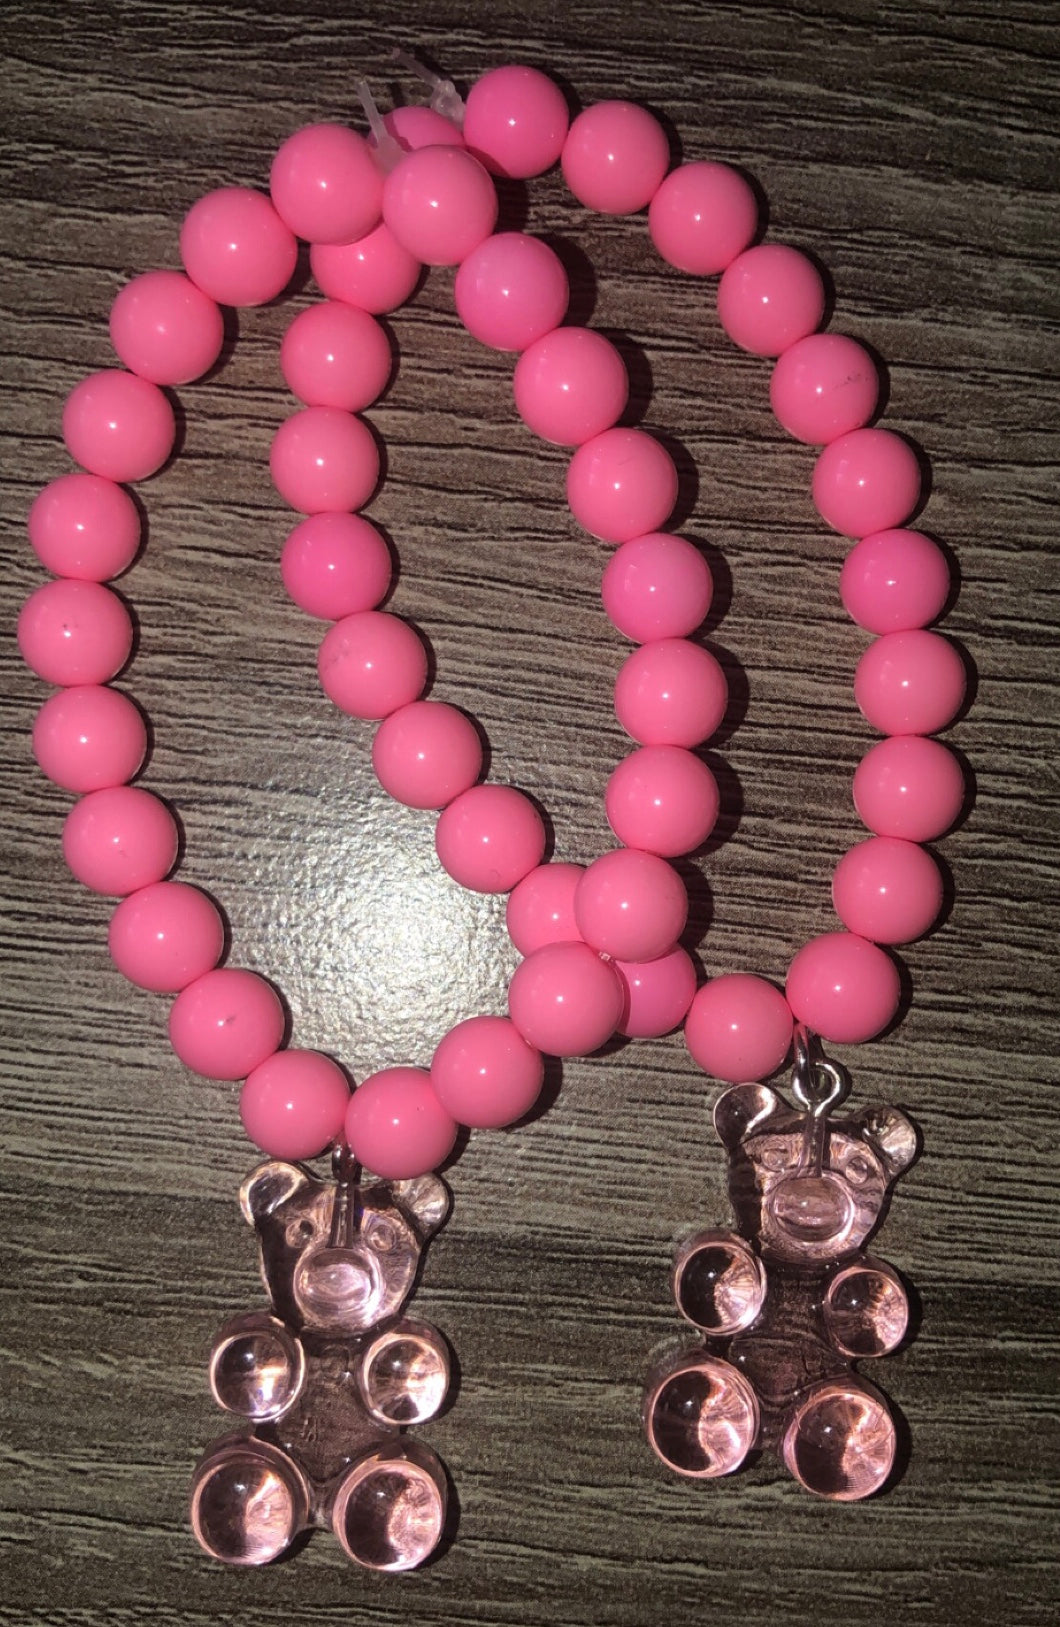 Pink Gummy Bears